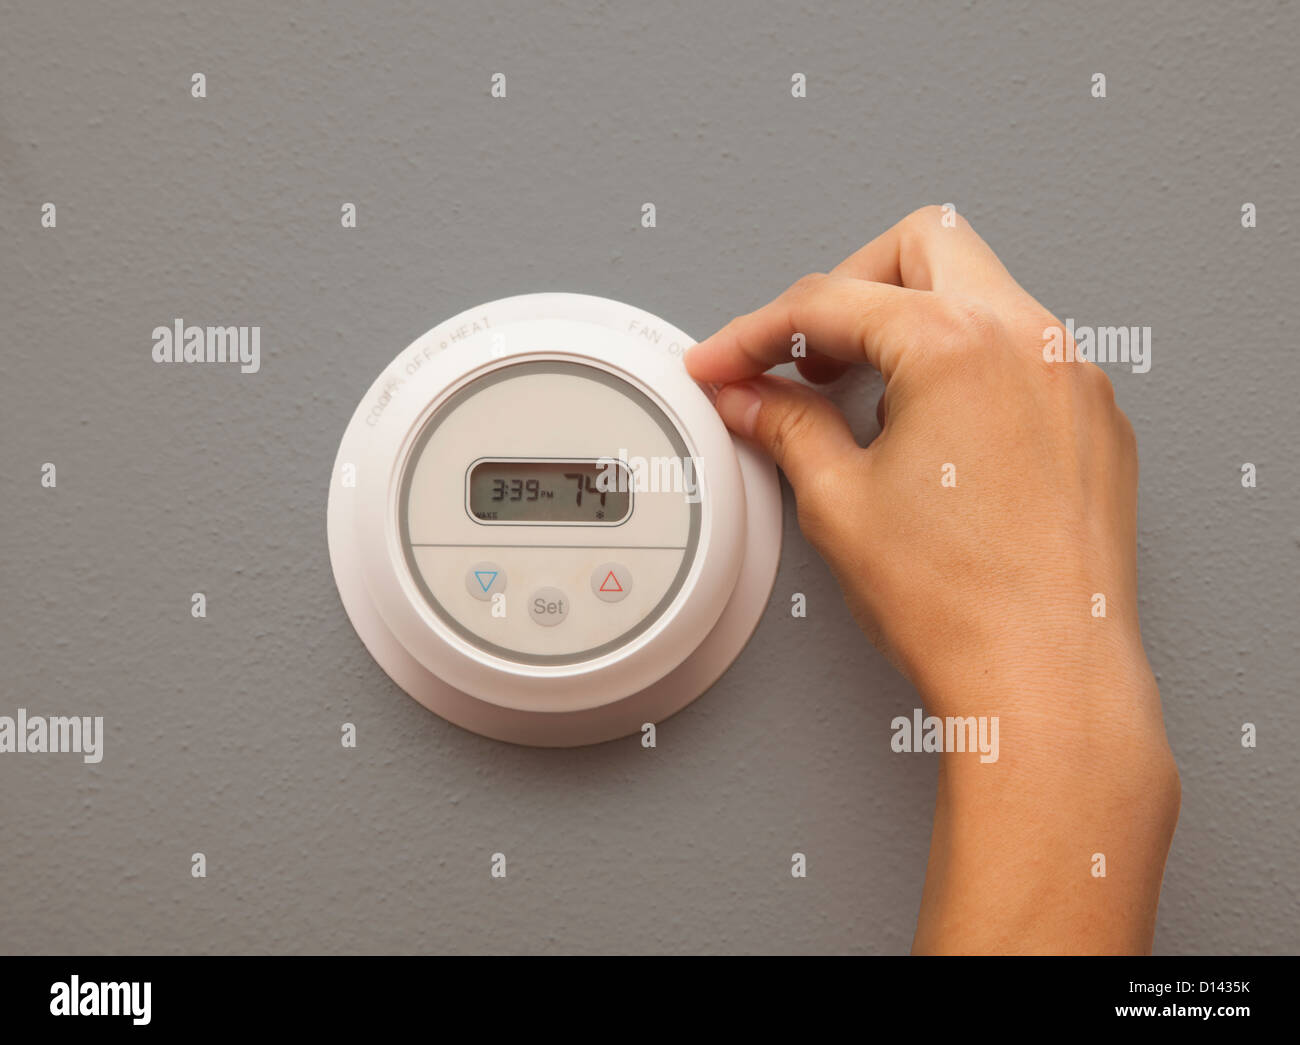 USA, Illinois, Metamora, close-up of woman adjusting thermostat Stock Photo